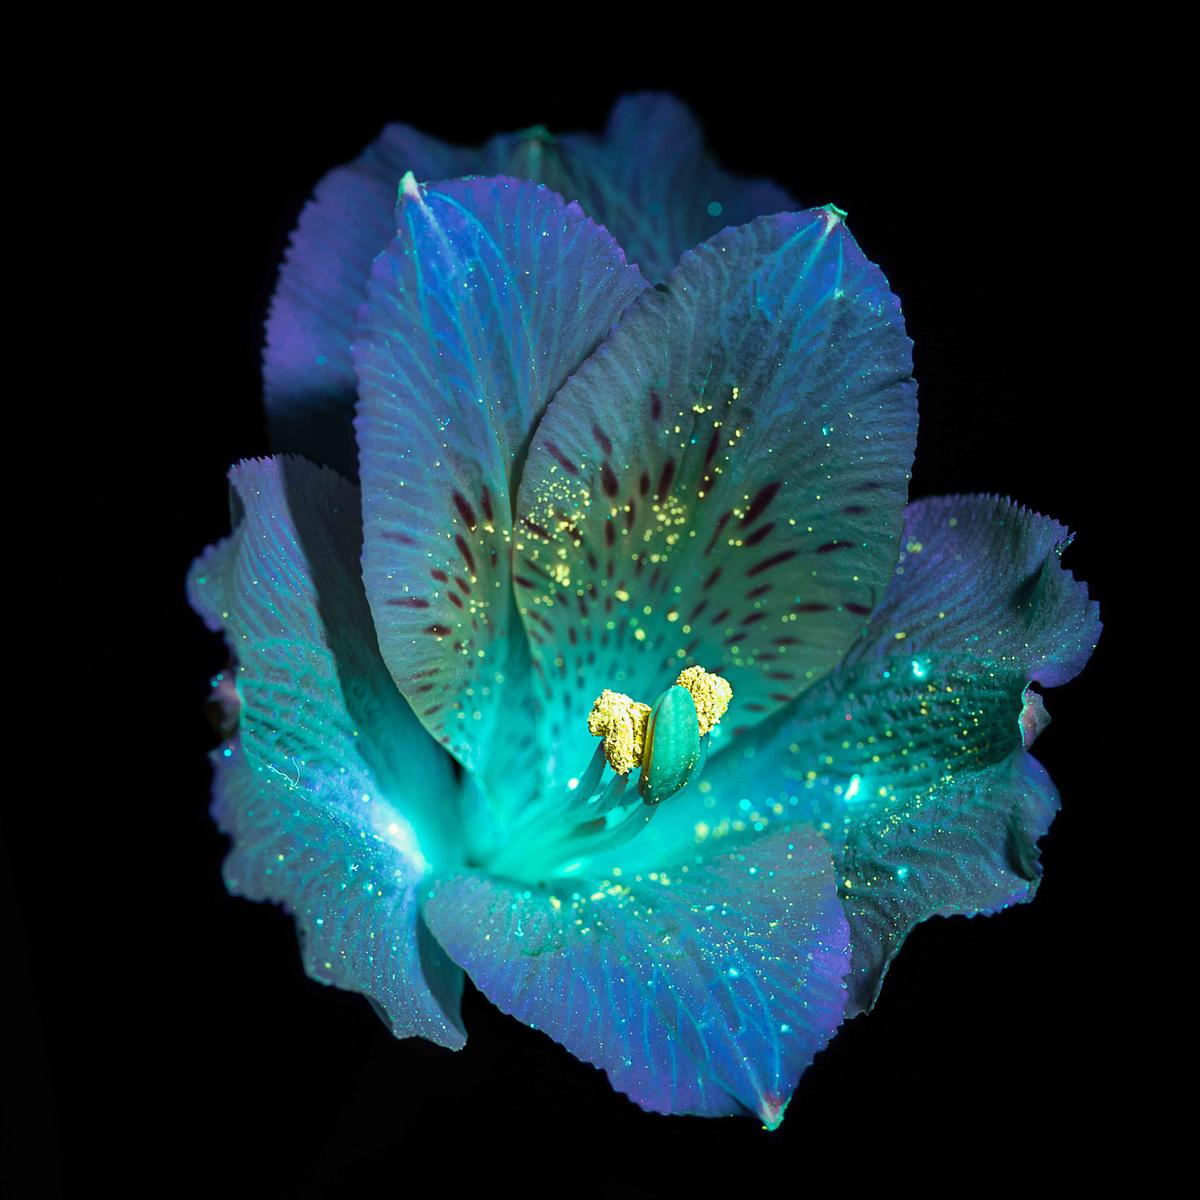 "Alstromeria (Peruvian lily) UVIVF". (Courtesy of <a href="https://www.instagram.com/bibadesign_uvivf/">Debora Lombardi</a> and <a href="https://www.bibadesign.it">Bibadesign</a>)